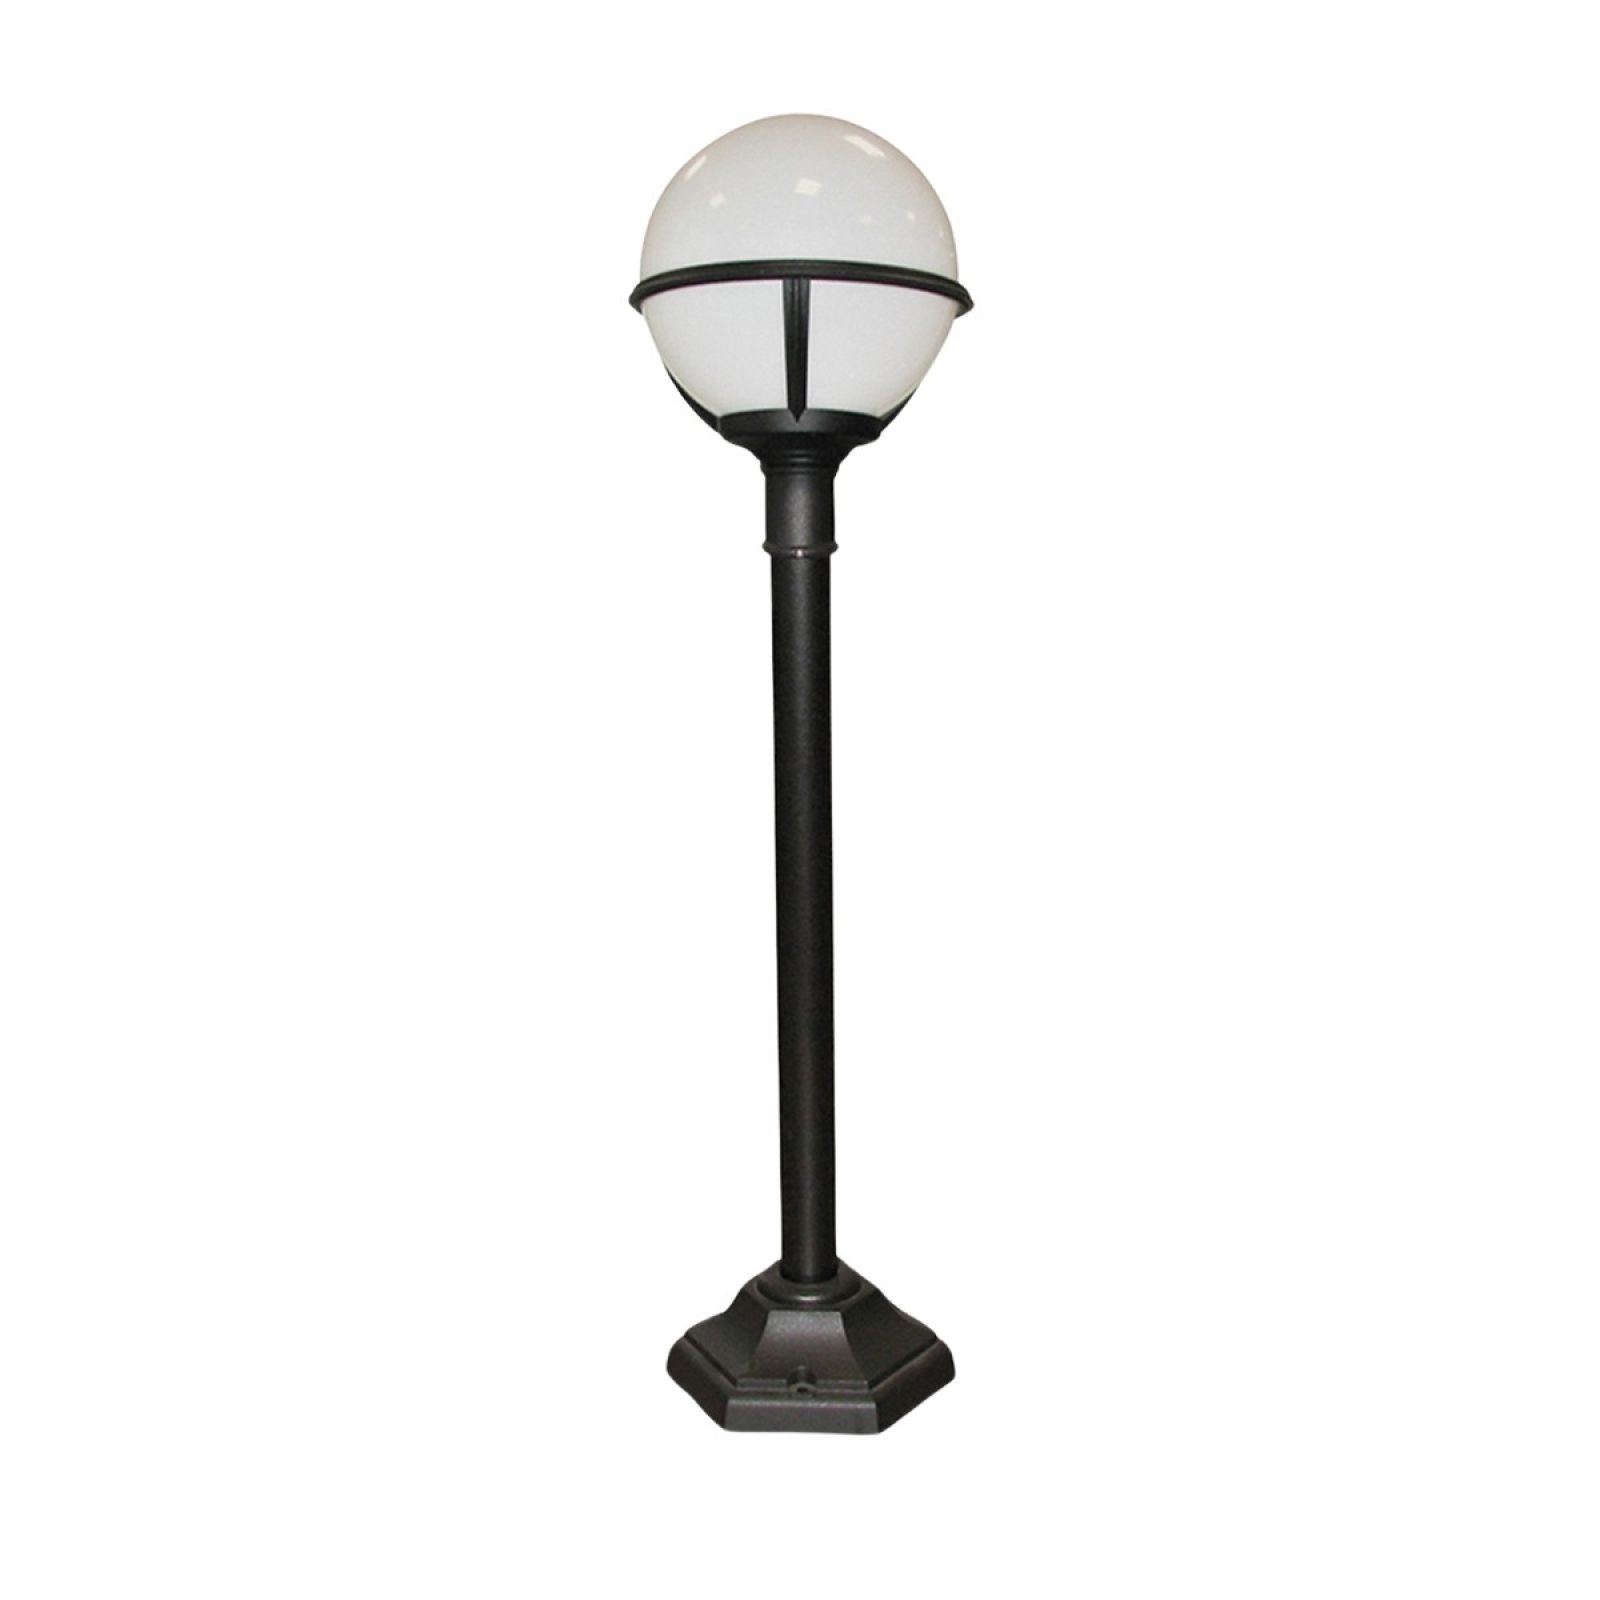 Globe short lamp post